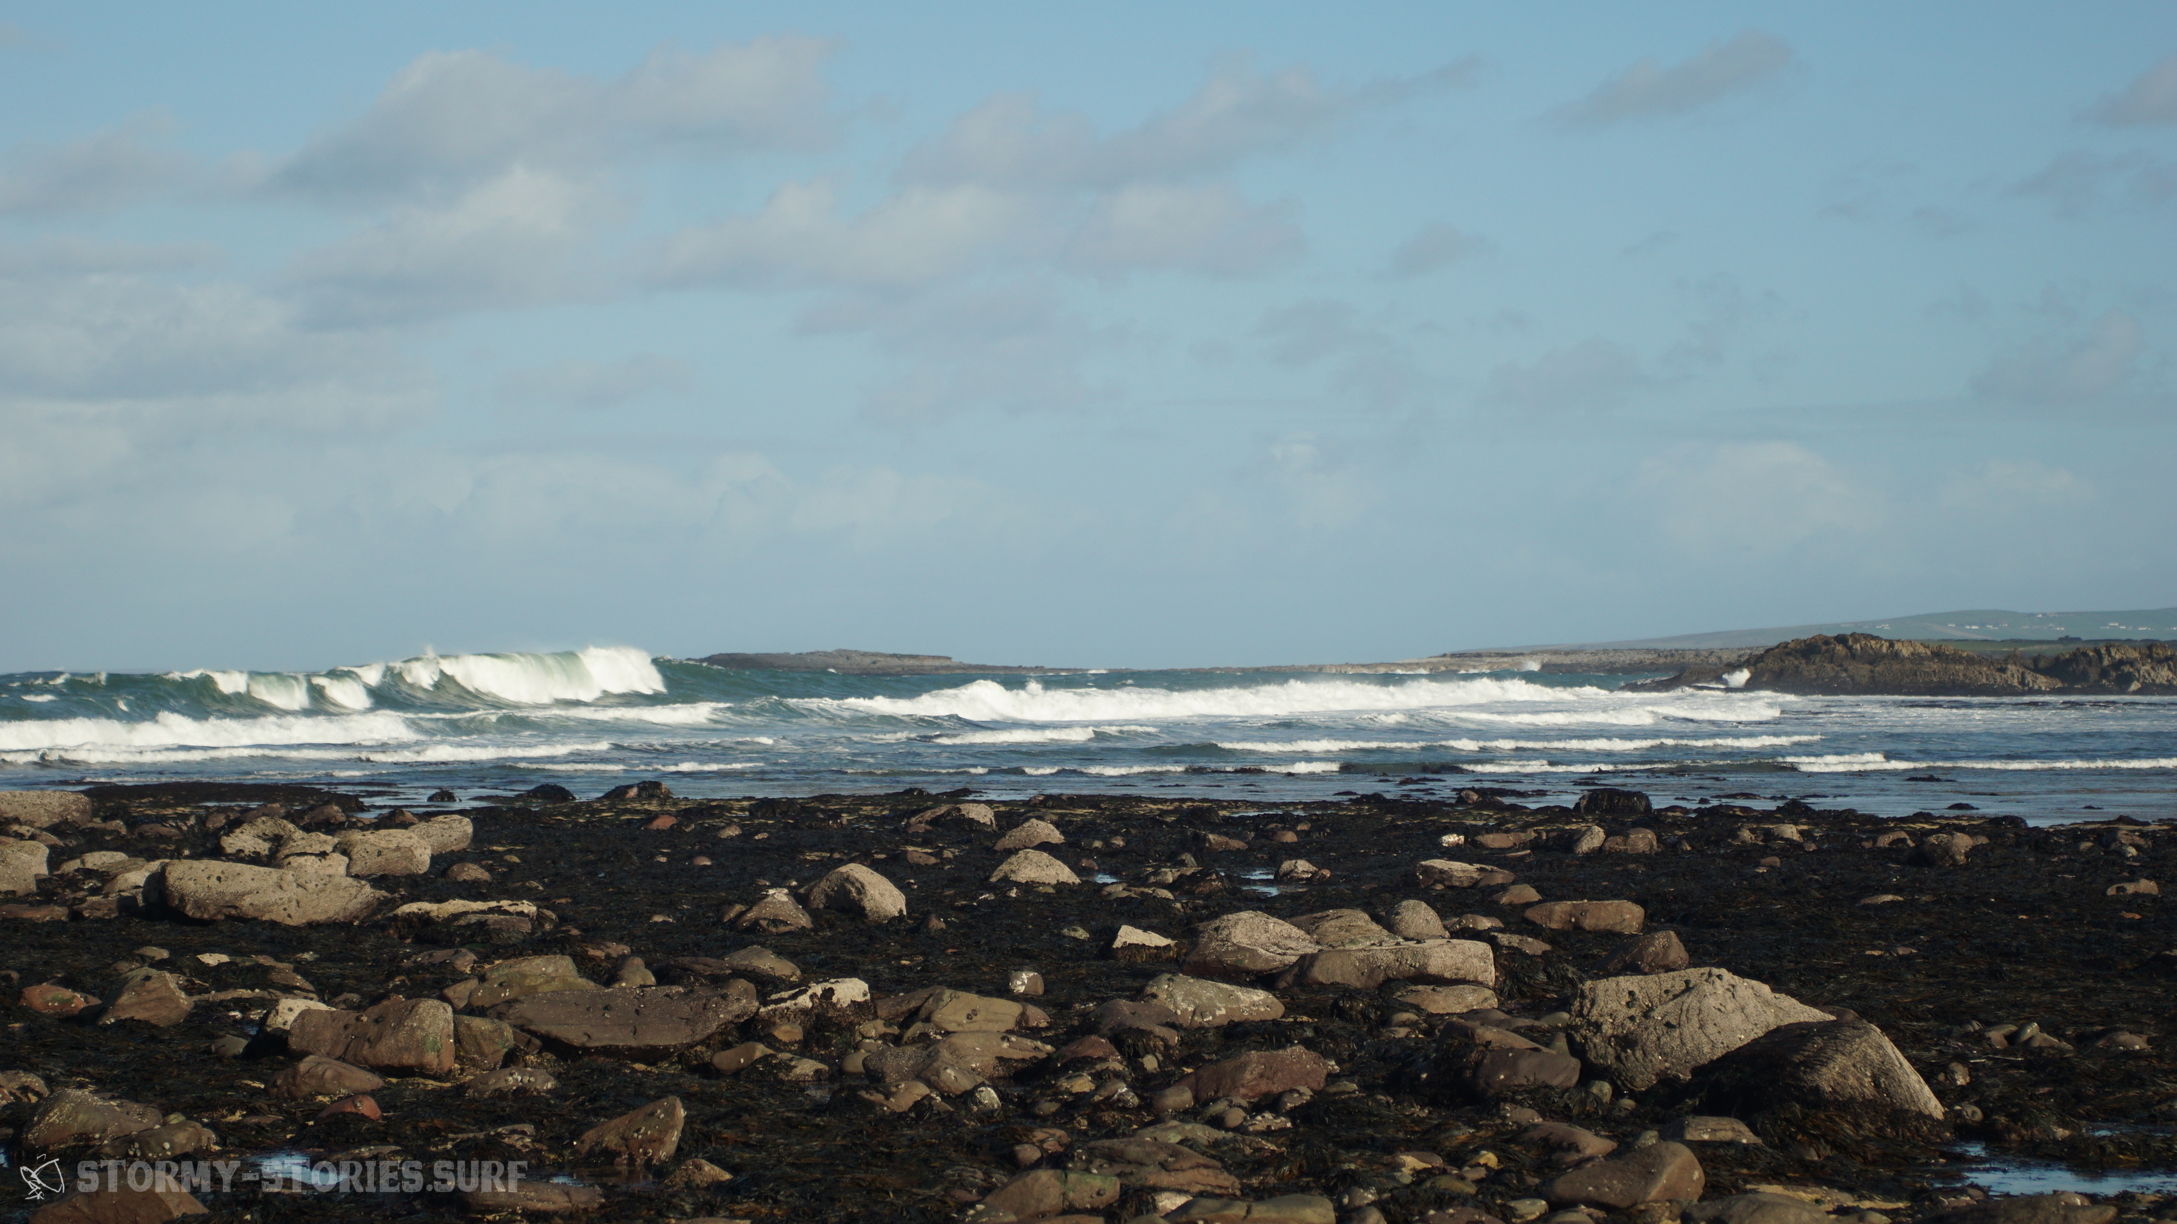 windsurf-stormy-stories-surf-travel-blog-ireland-irland-11-05-arrival-ankunft-brandon-bay-WM-35p-DSC08834